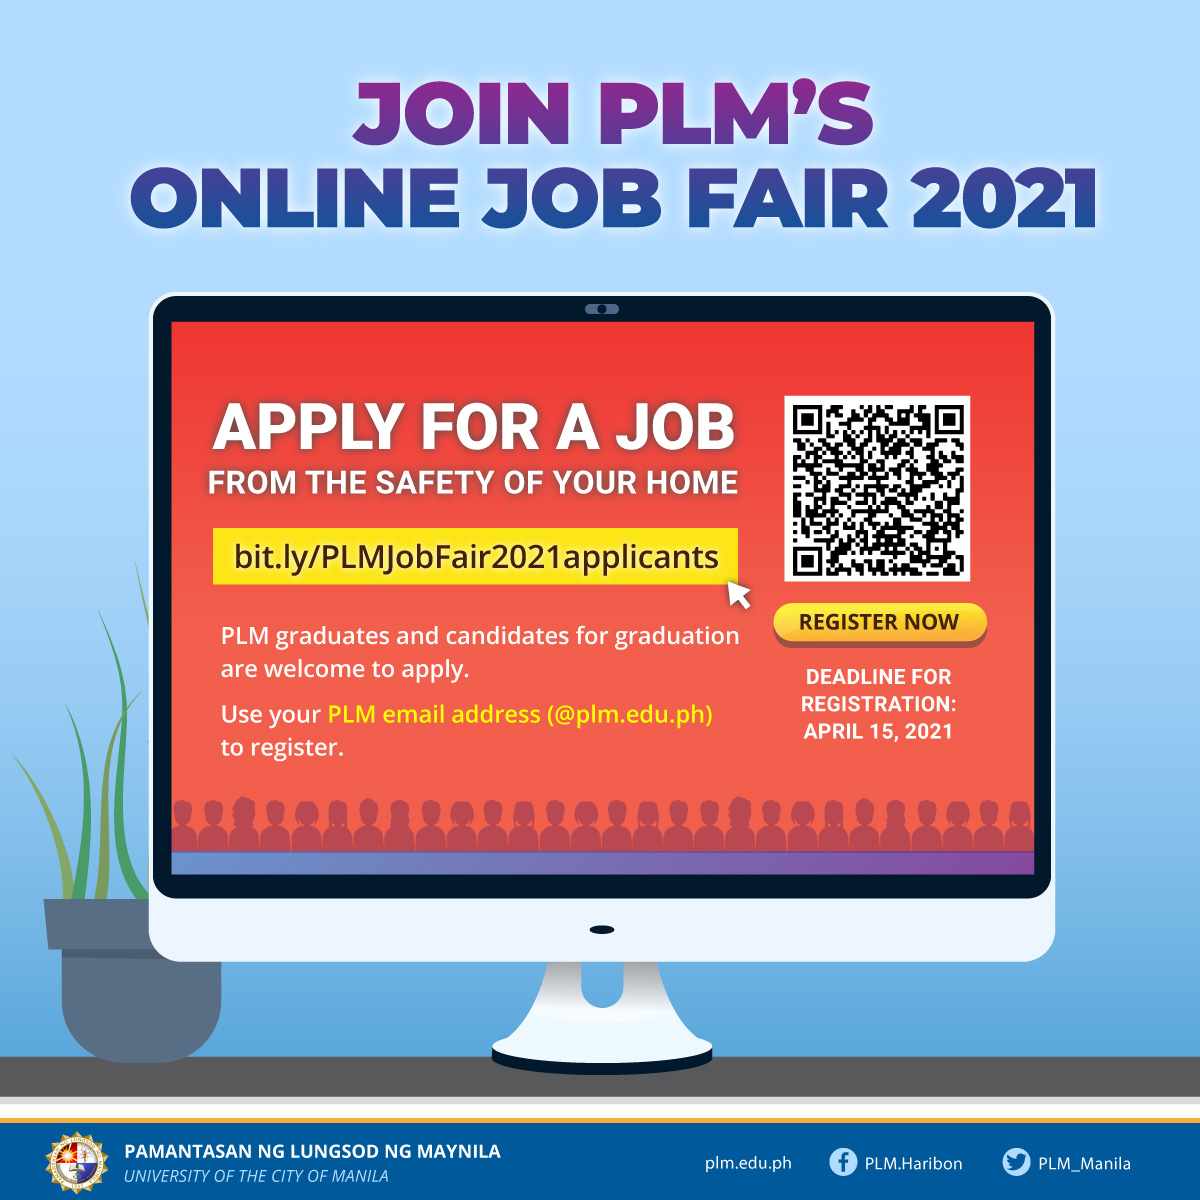 Register for PLM's Online Job Fair 2021 until April 15, 2021